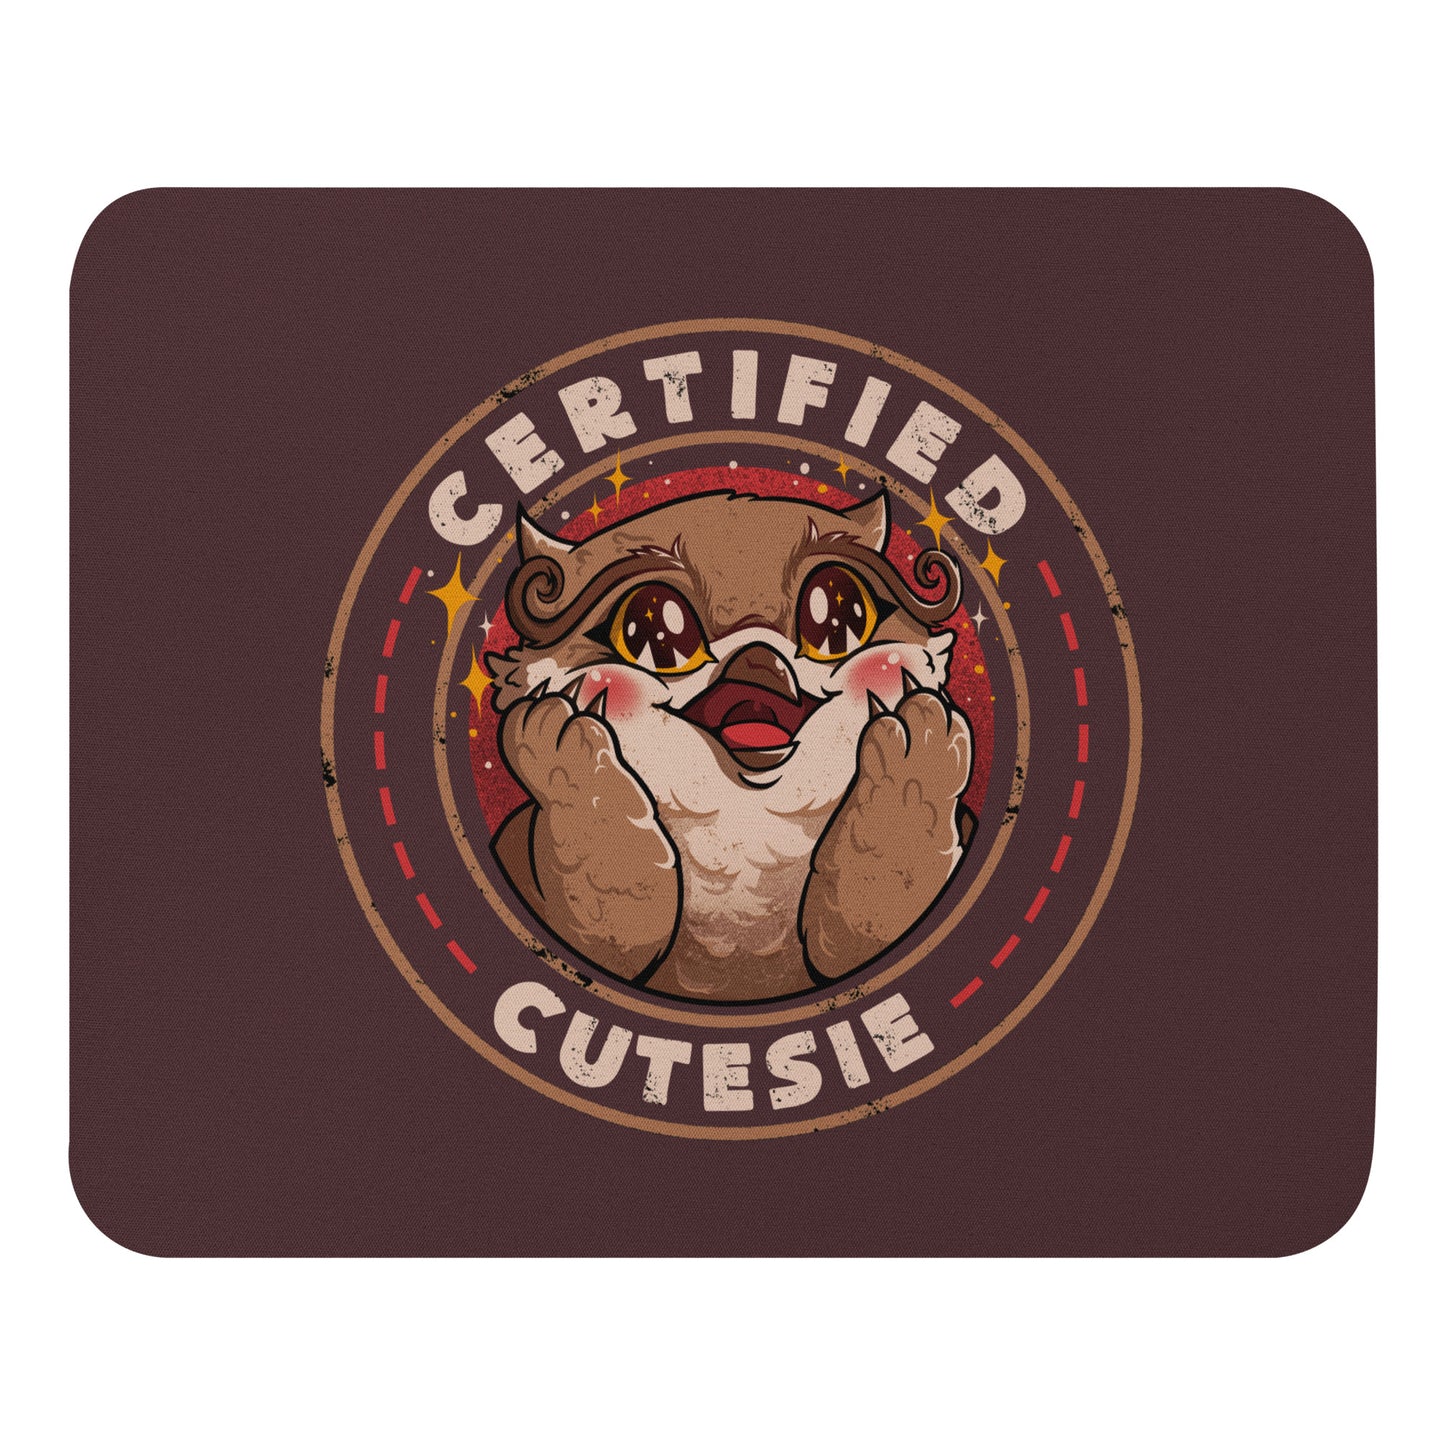 Certified Cutesie - Mouse Pad